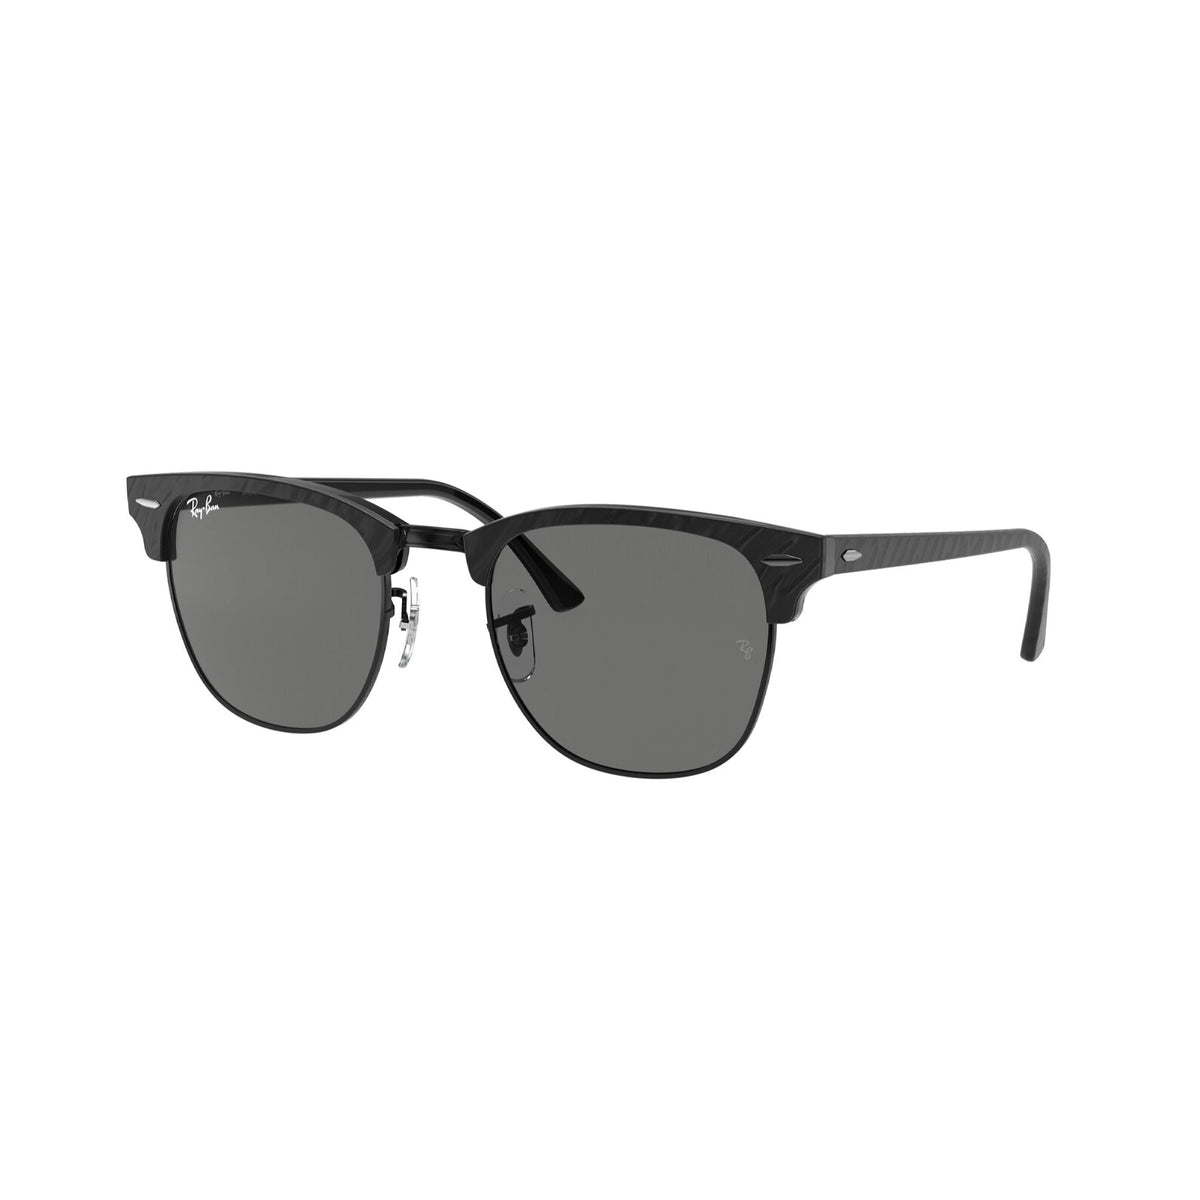 Ray-Ban Unisex Sunglasses Clubmaster Black Dark Grey Plastic Plastic  0RB3016 1305B1 49